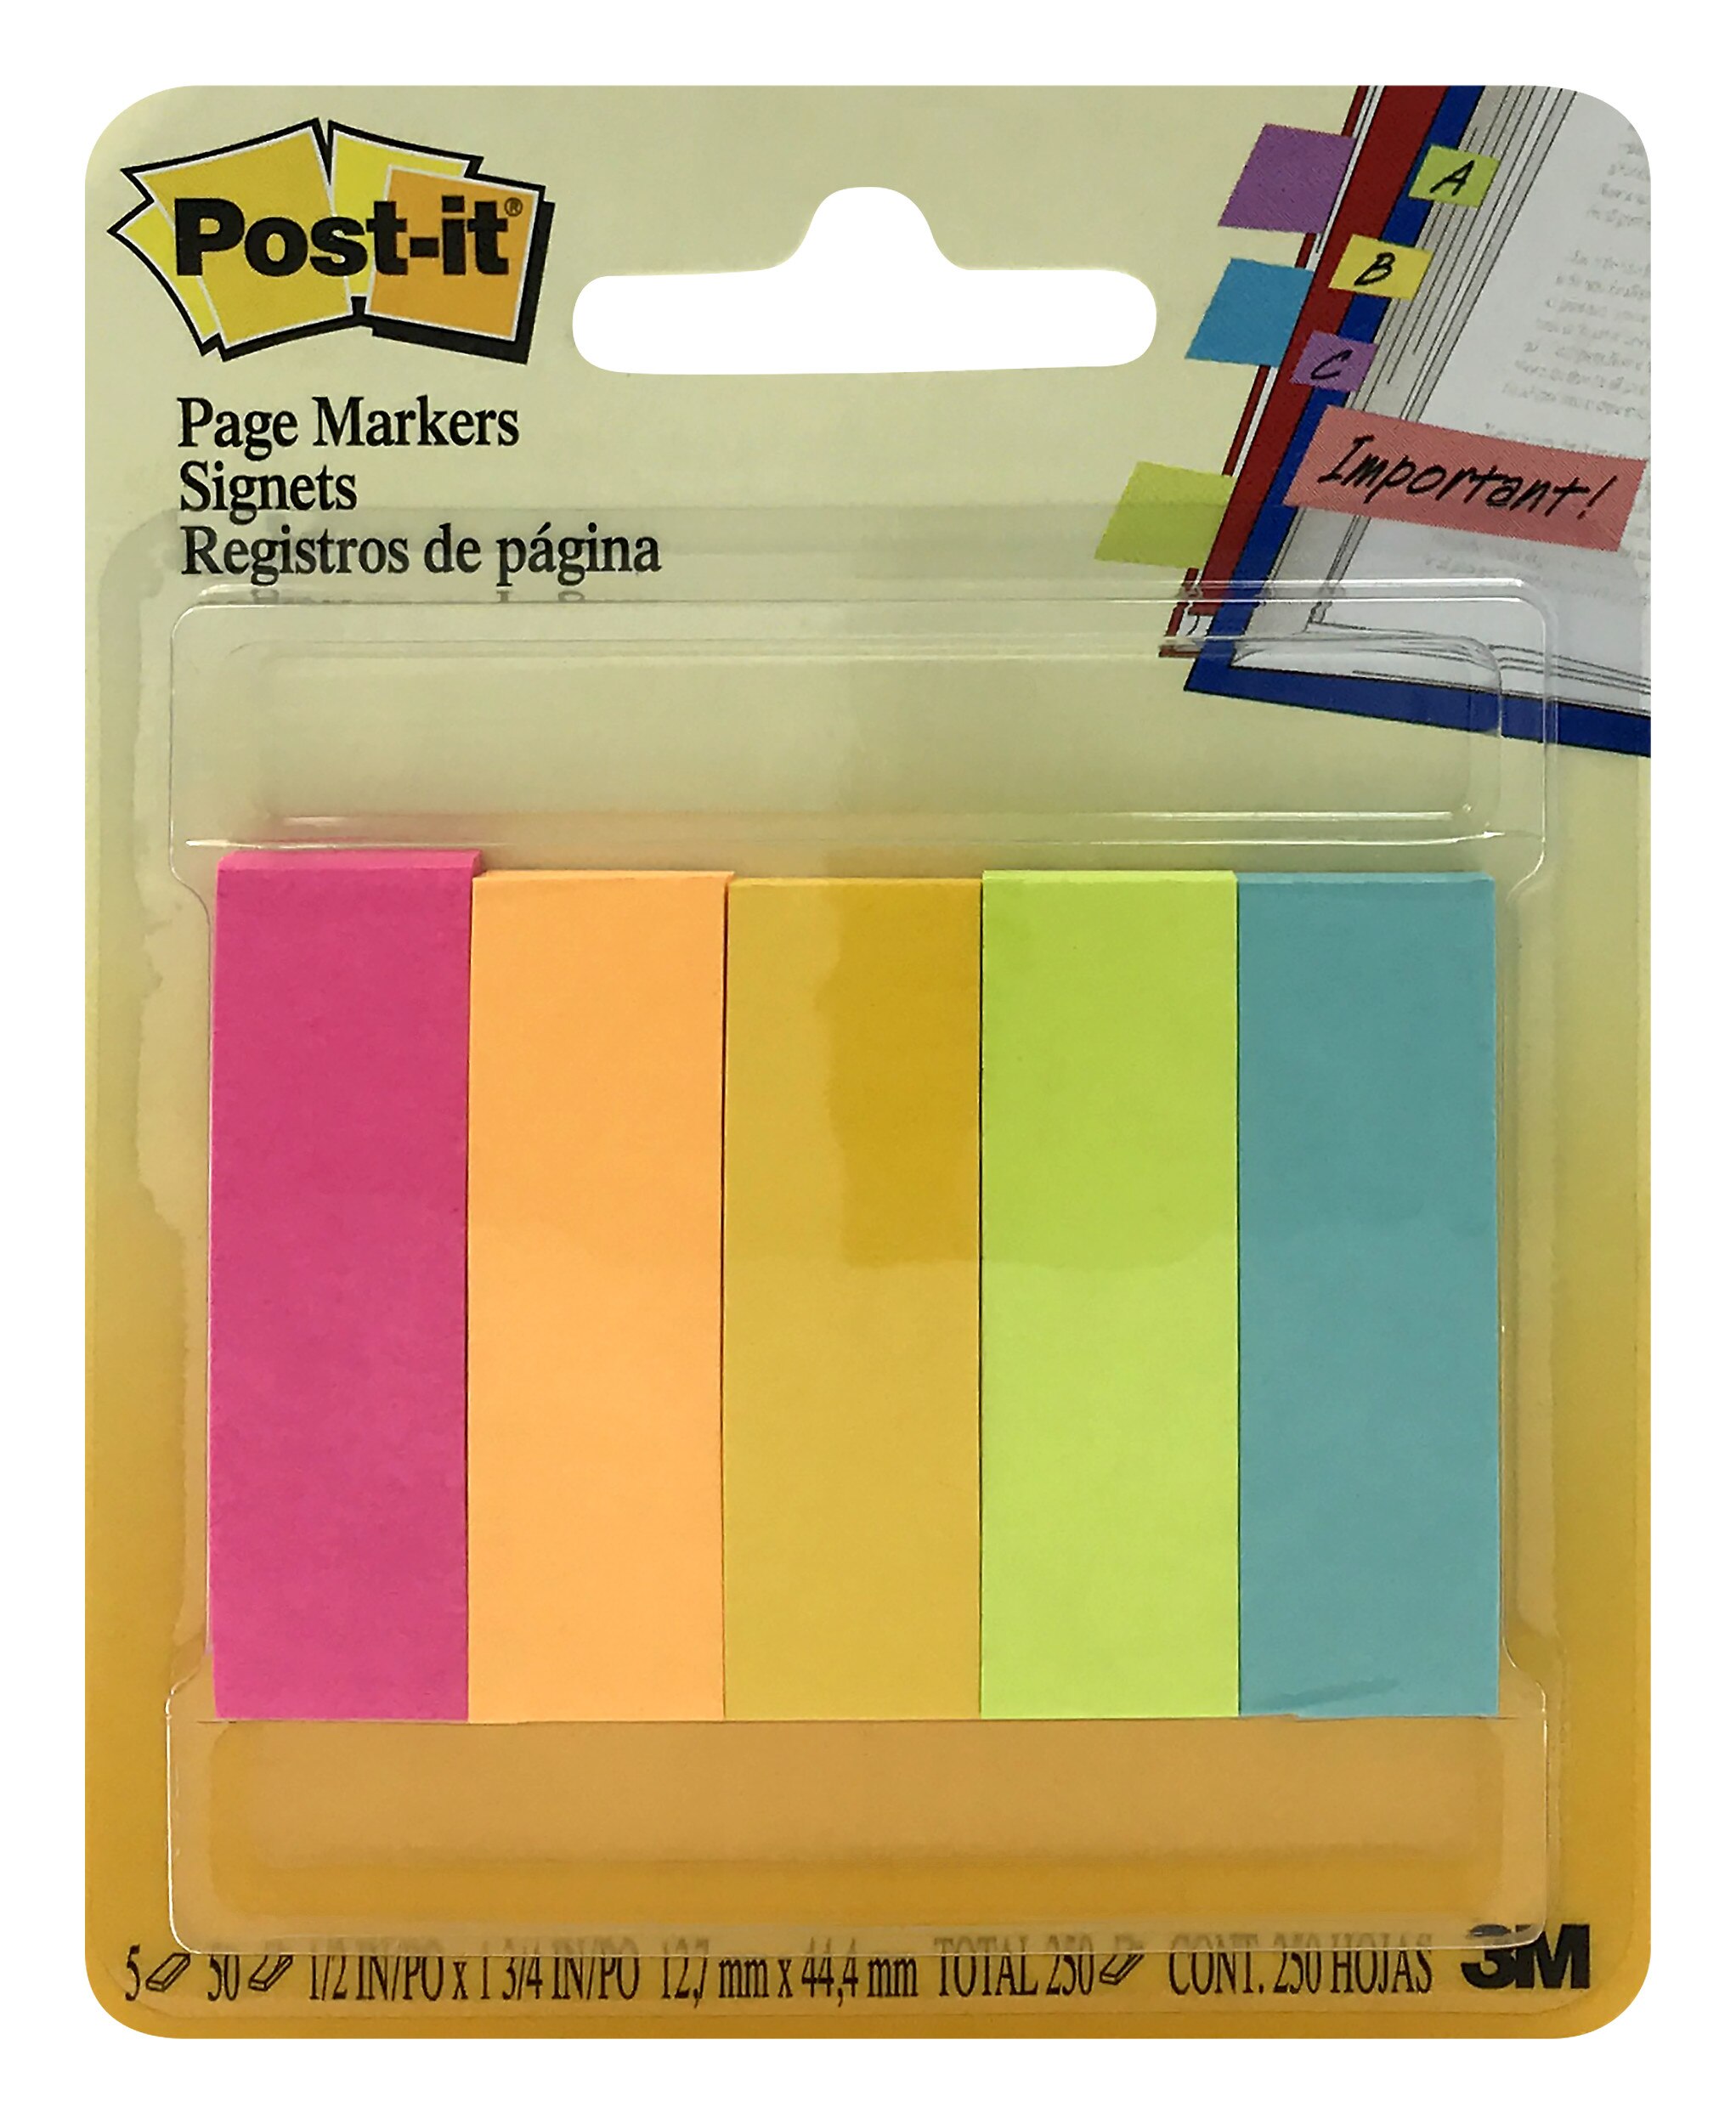 3M Post-it Page Markers Flourescent Colors, 5 Pads